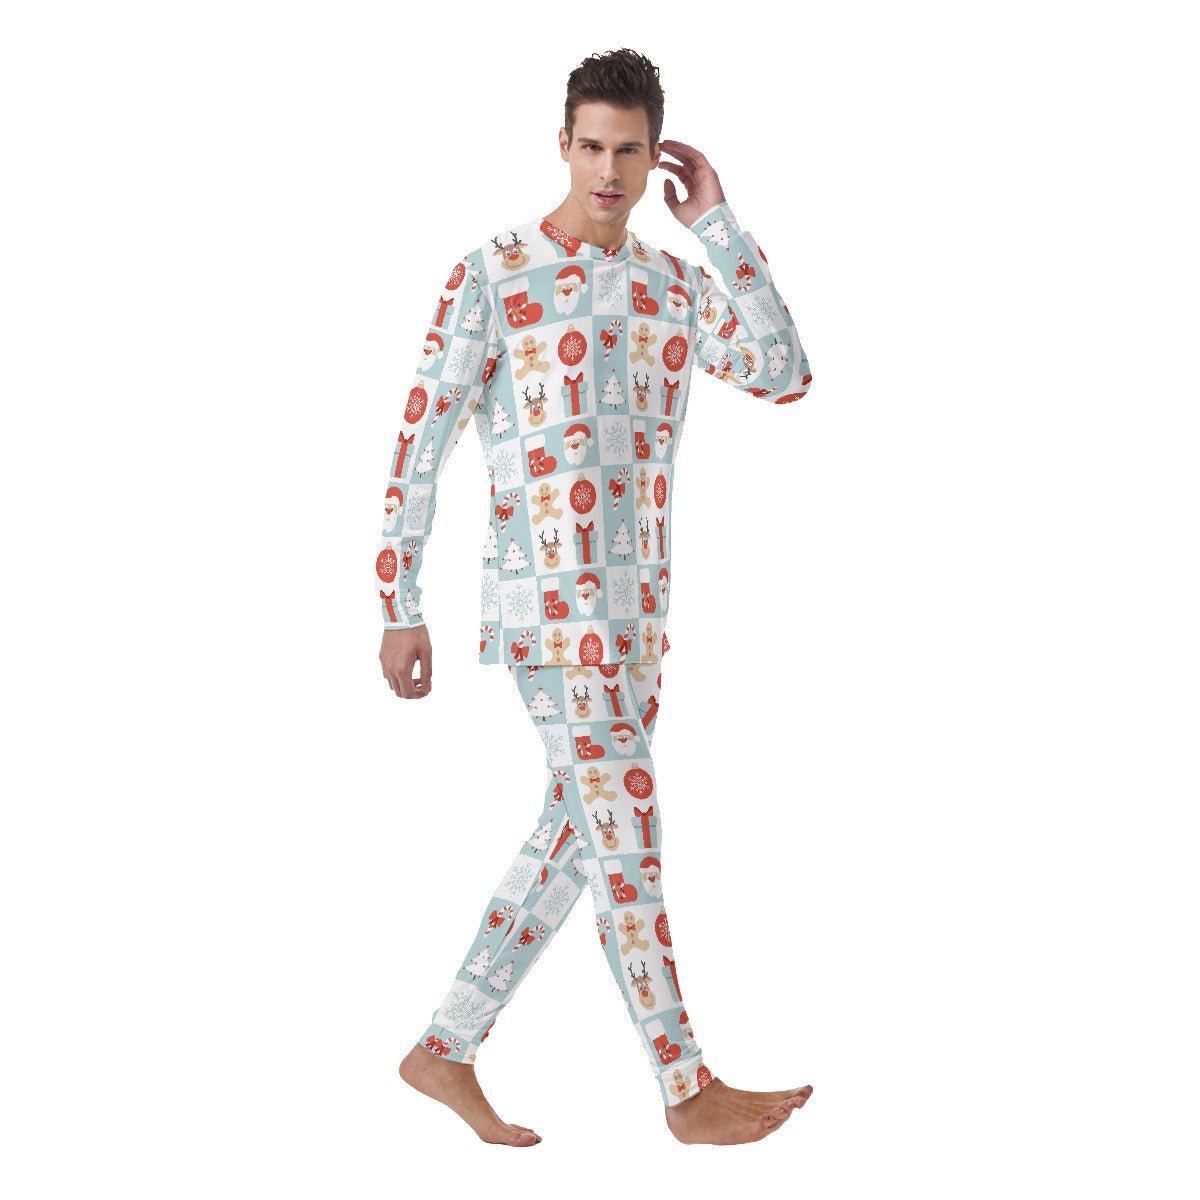 Men's Christmas Pyjamas - Quilt Style - Festive Style